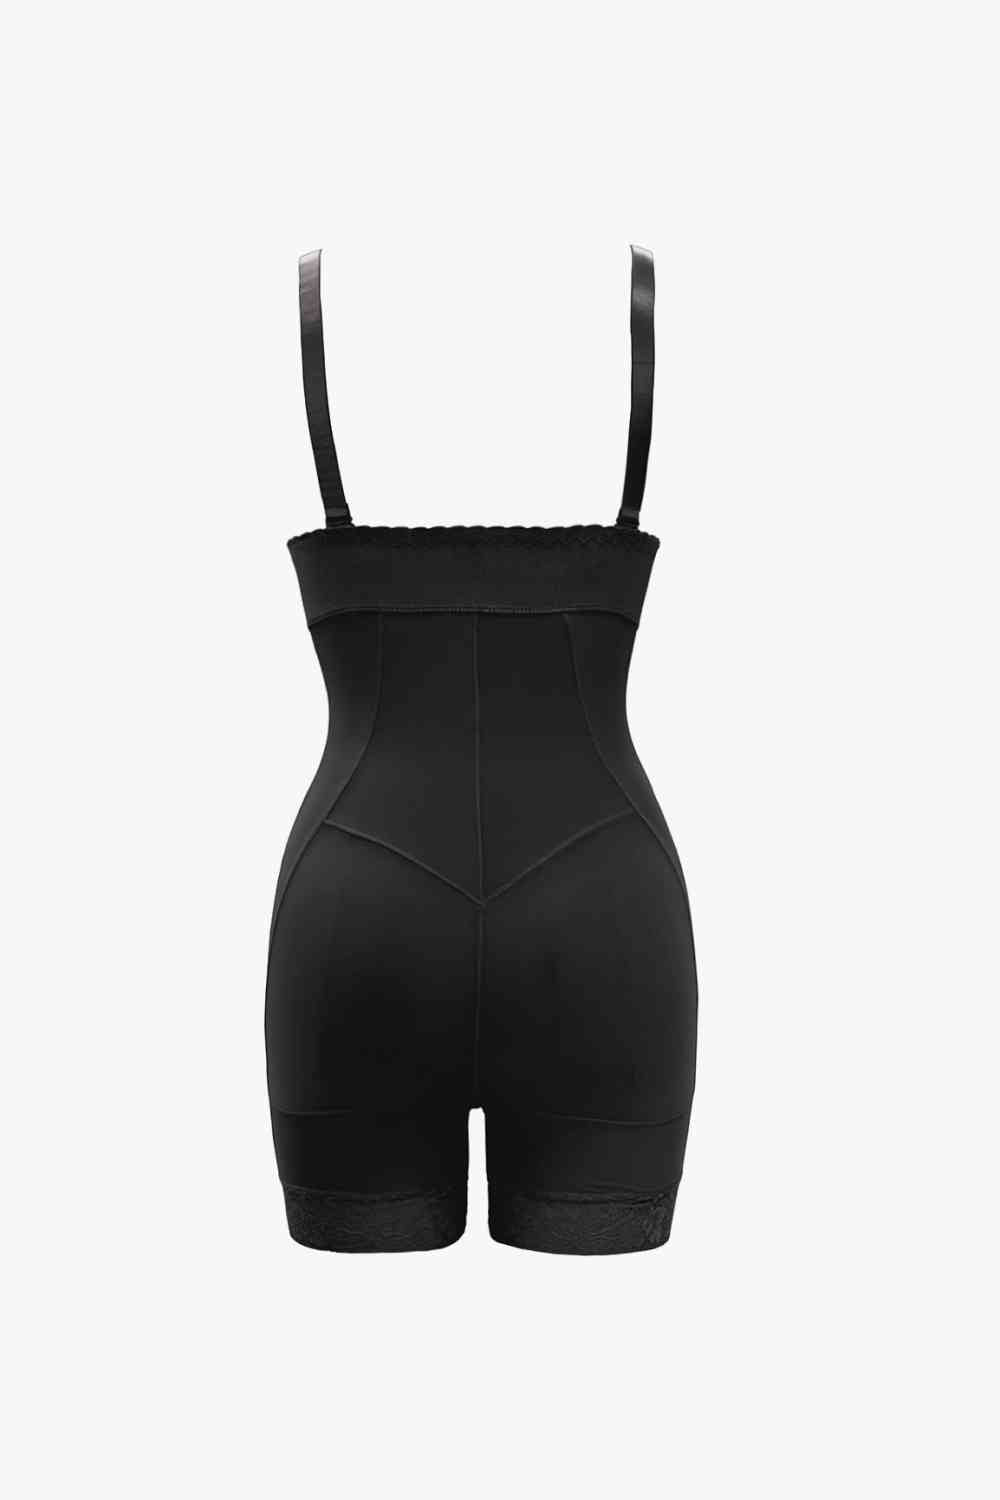 Full Size Zip Up Under-Bust Shaping Bodysuit - Opulence & Essence